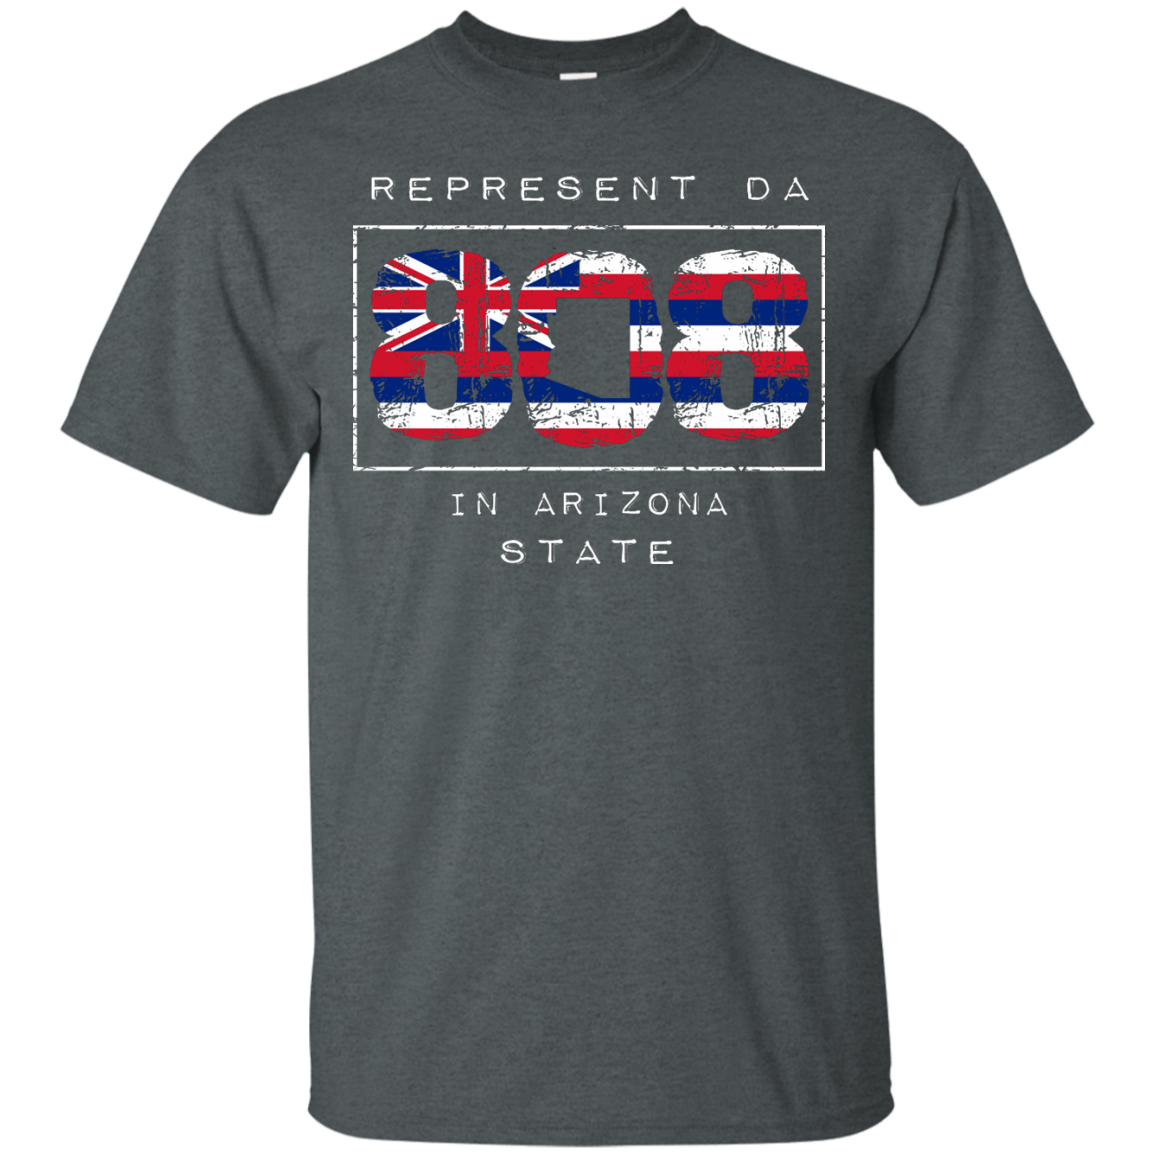 Represent Da 808 In Arizona State Ultra Cotton T-Shirt, T-Shirts, Hawaii Nei All Day